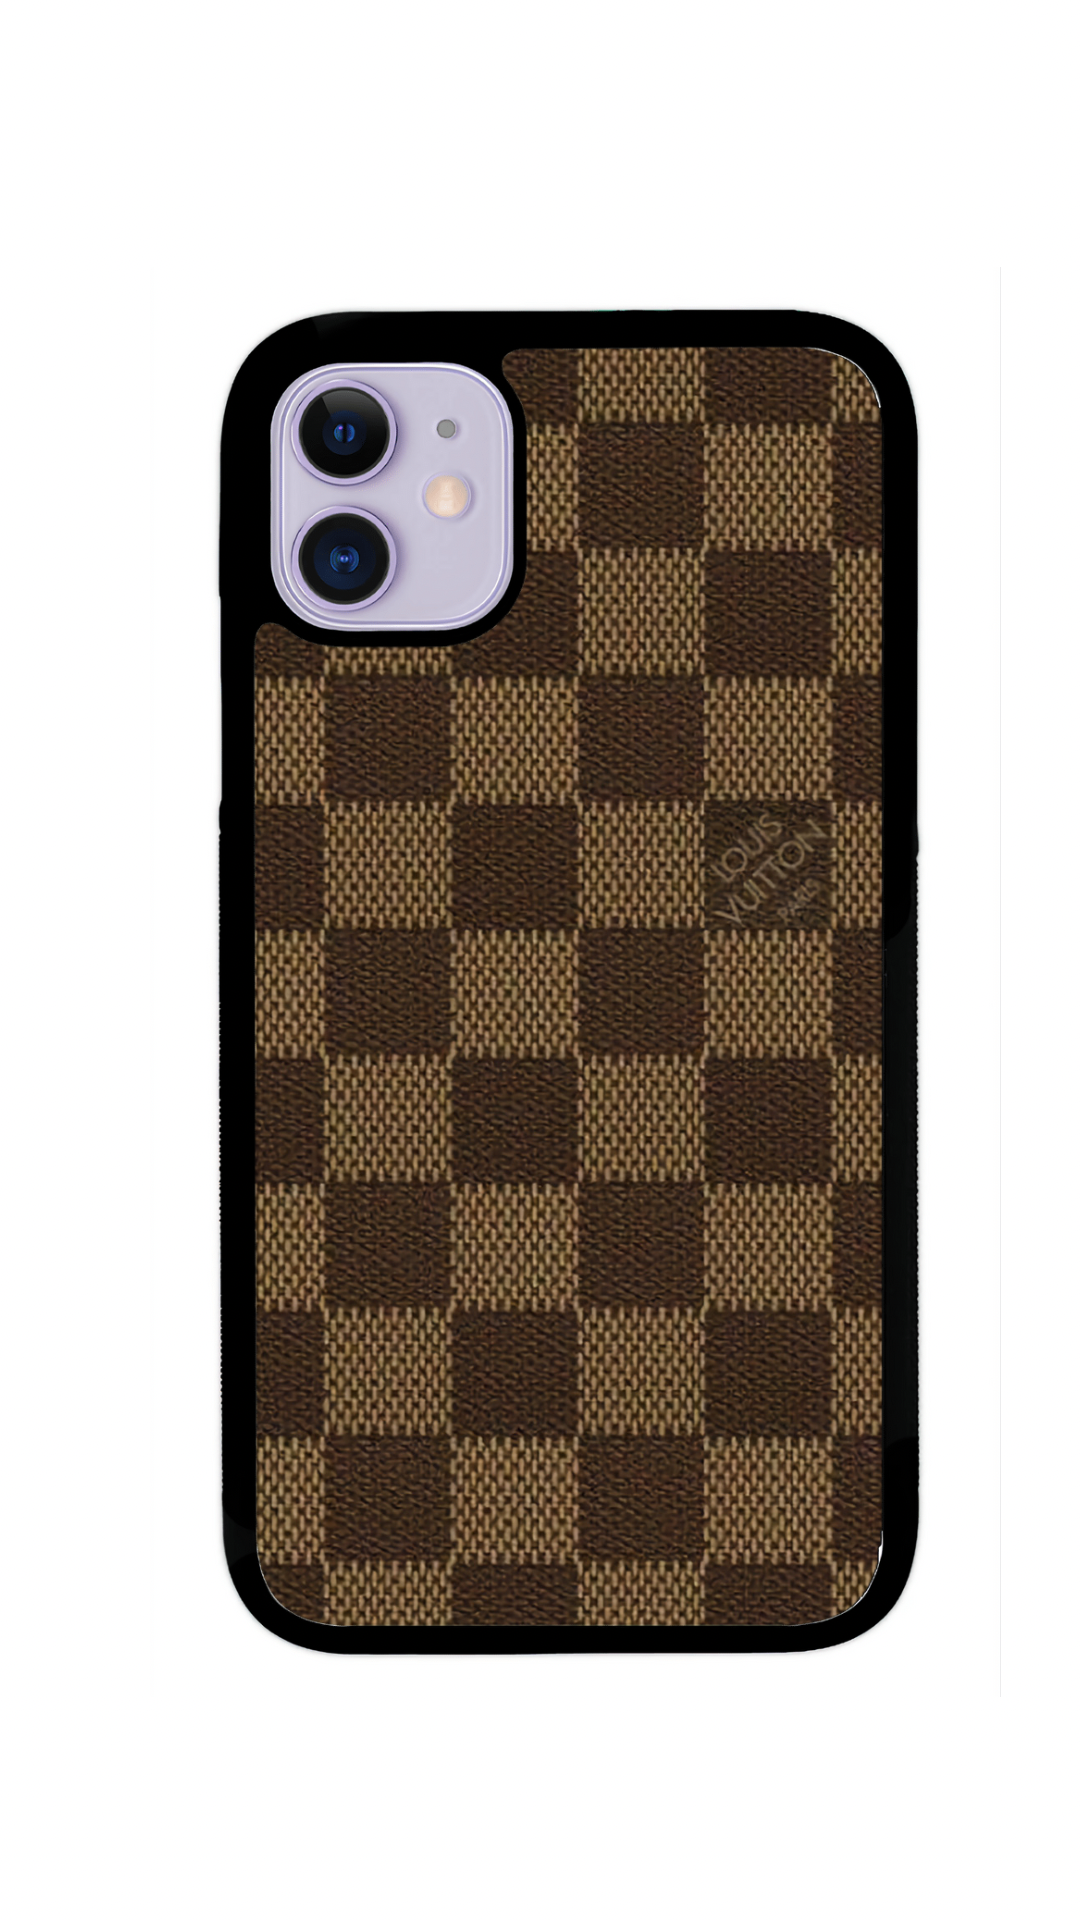 LOUIS VUITTON LV LOGO GOLD BLACK iPhone 14 Pro Max Case Cover